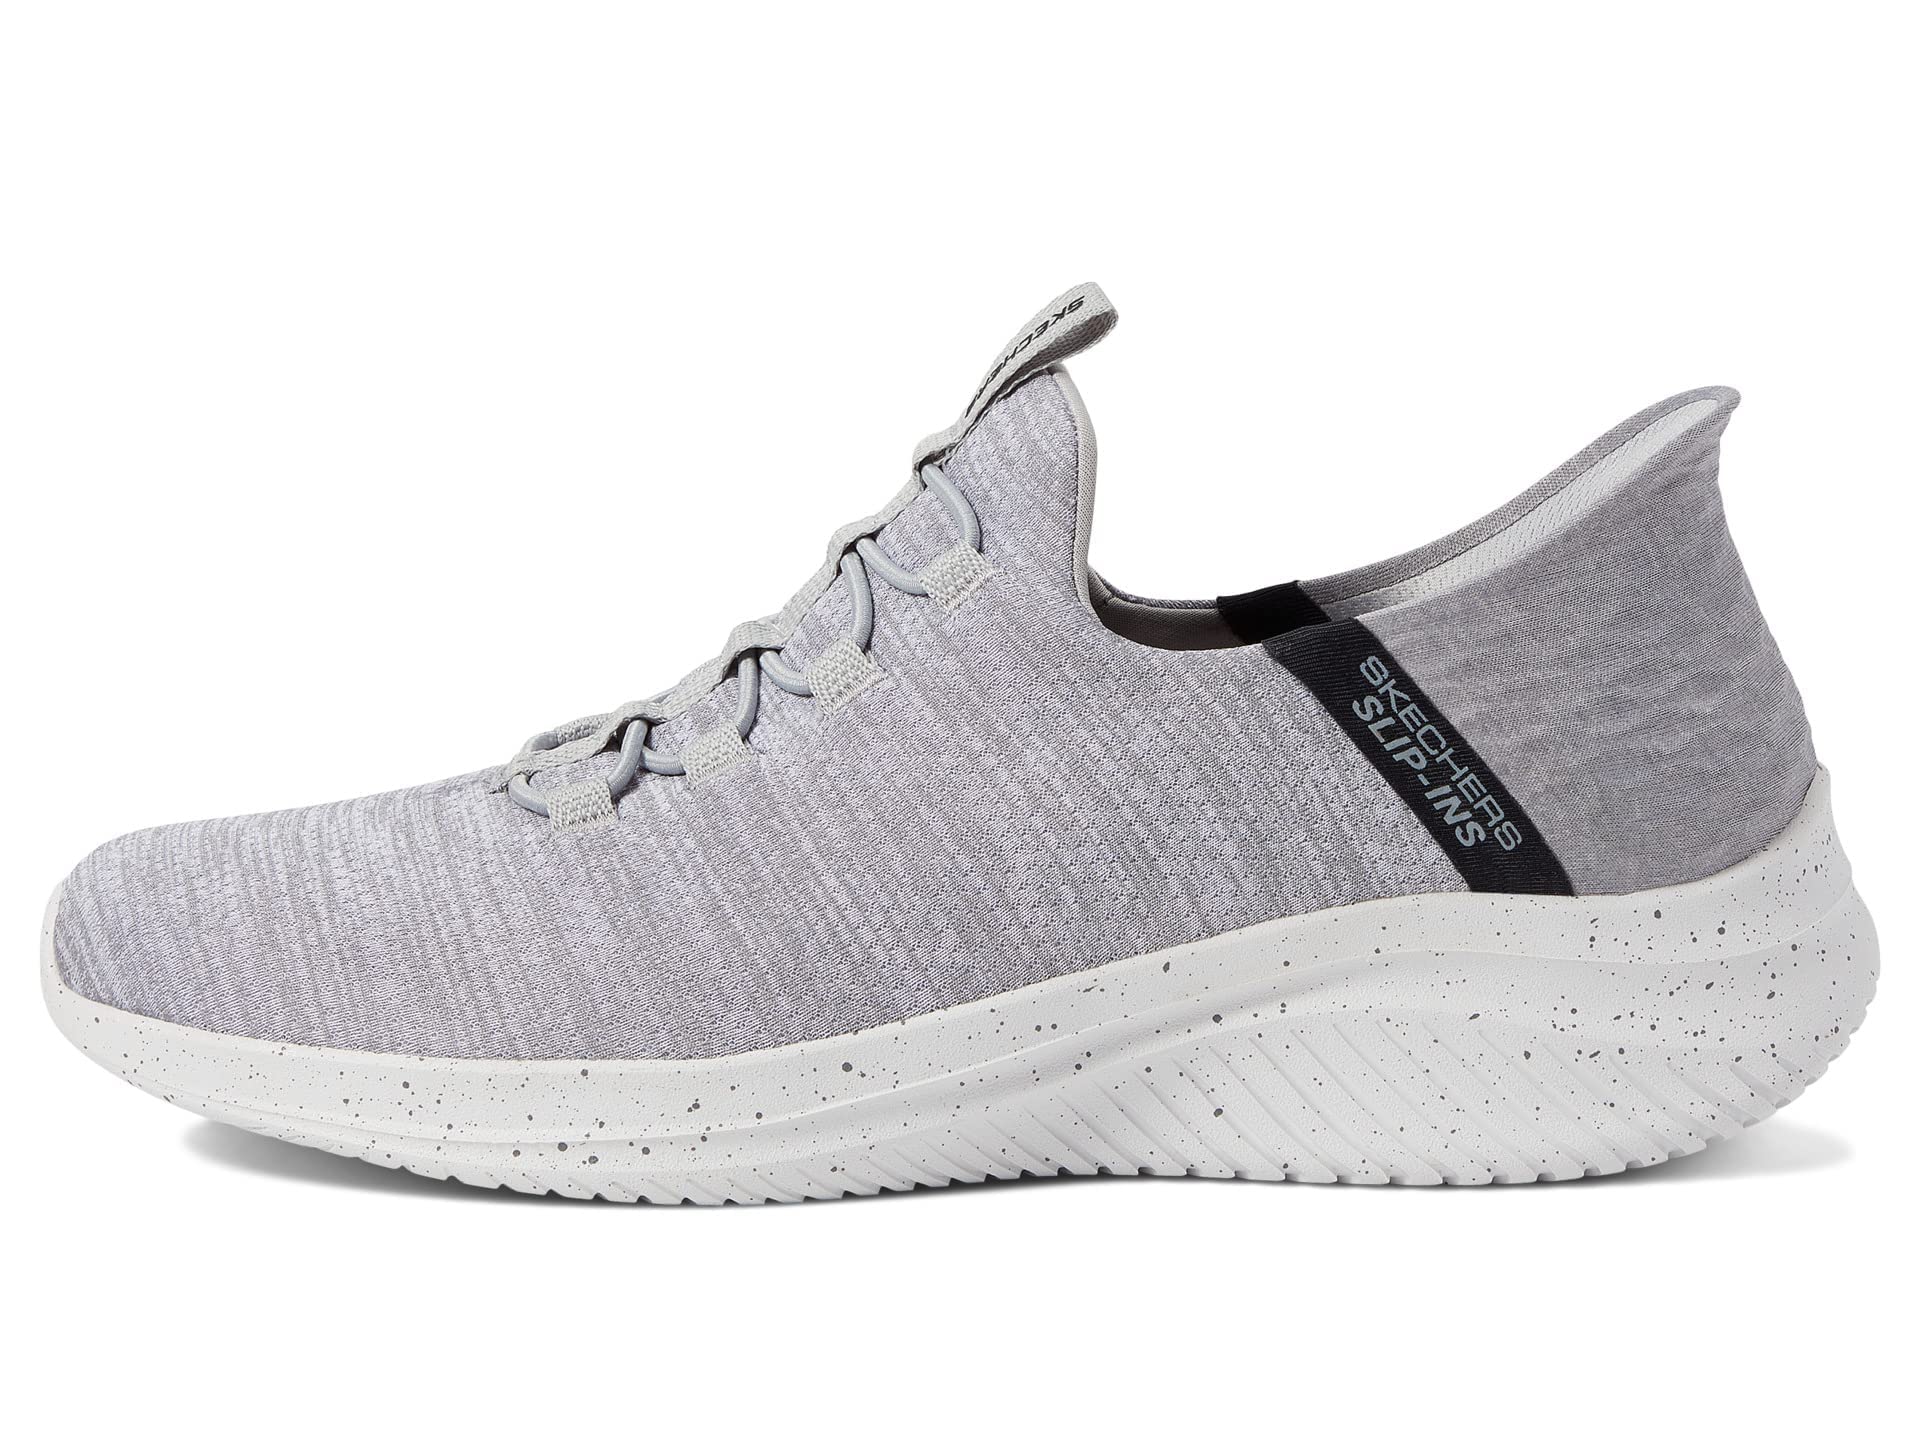 Skechers Men's Ultra Flex 3.0 Right Away Slip-in Loafer - Various Sizes - (Grey) $49.98 + Free Shipping